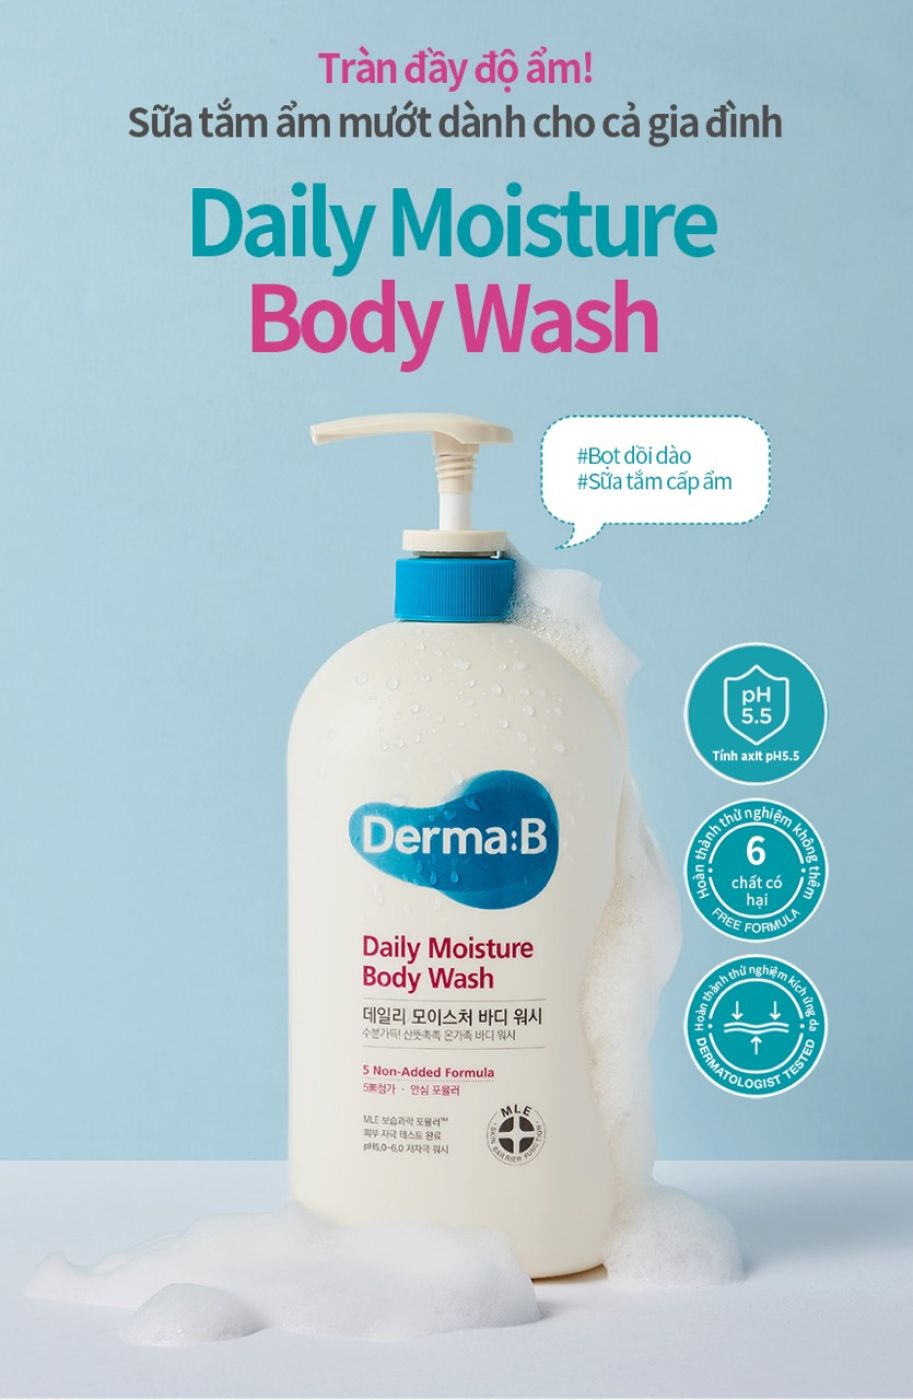 Sữa Tắm Cấp Ẩm Derma:B Moisture Body Wash ❤️ 1000ml